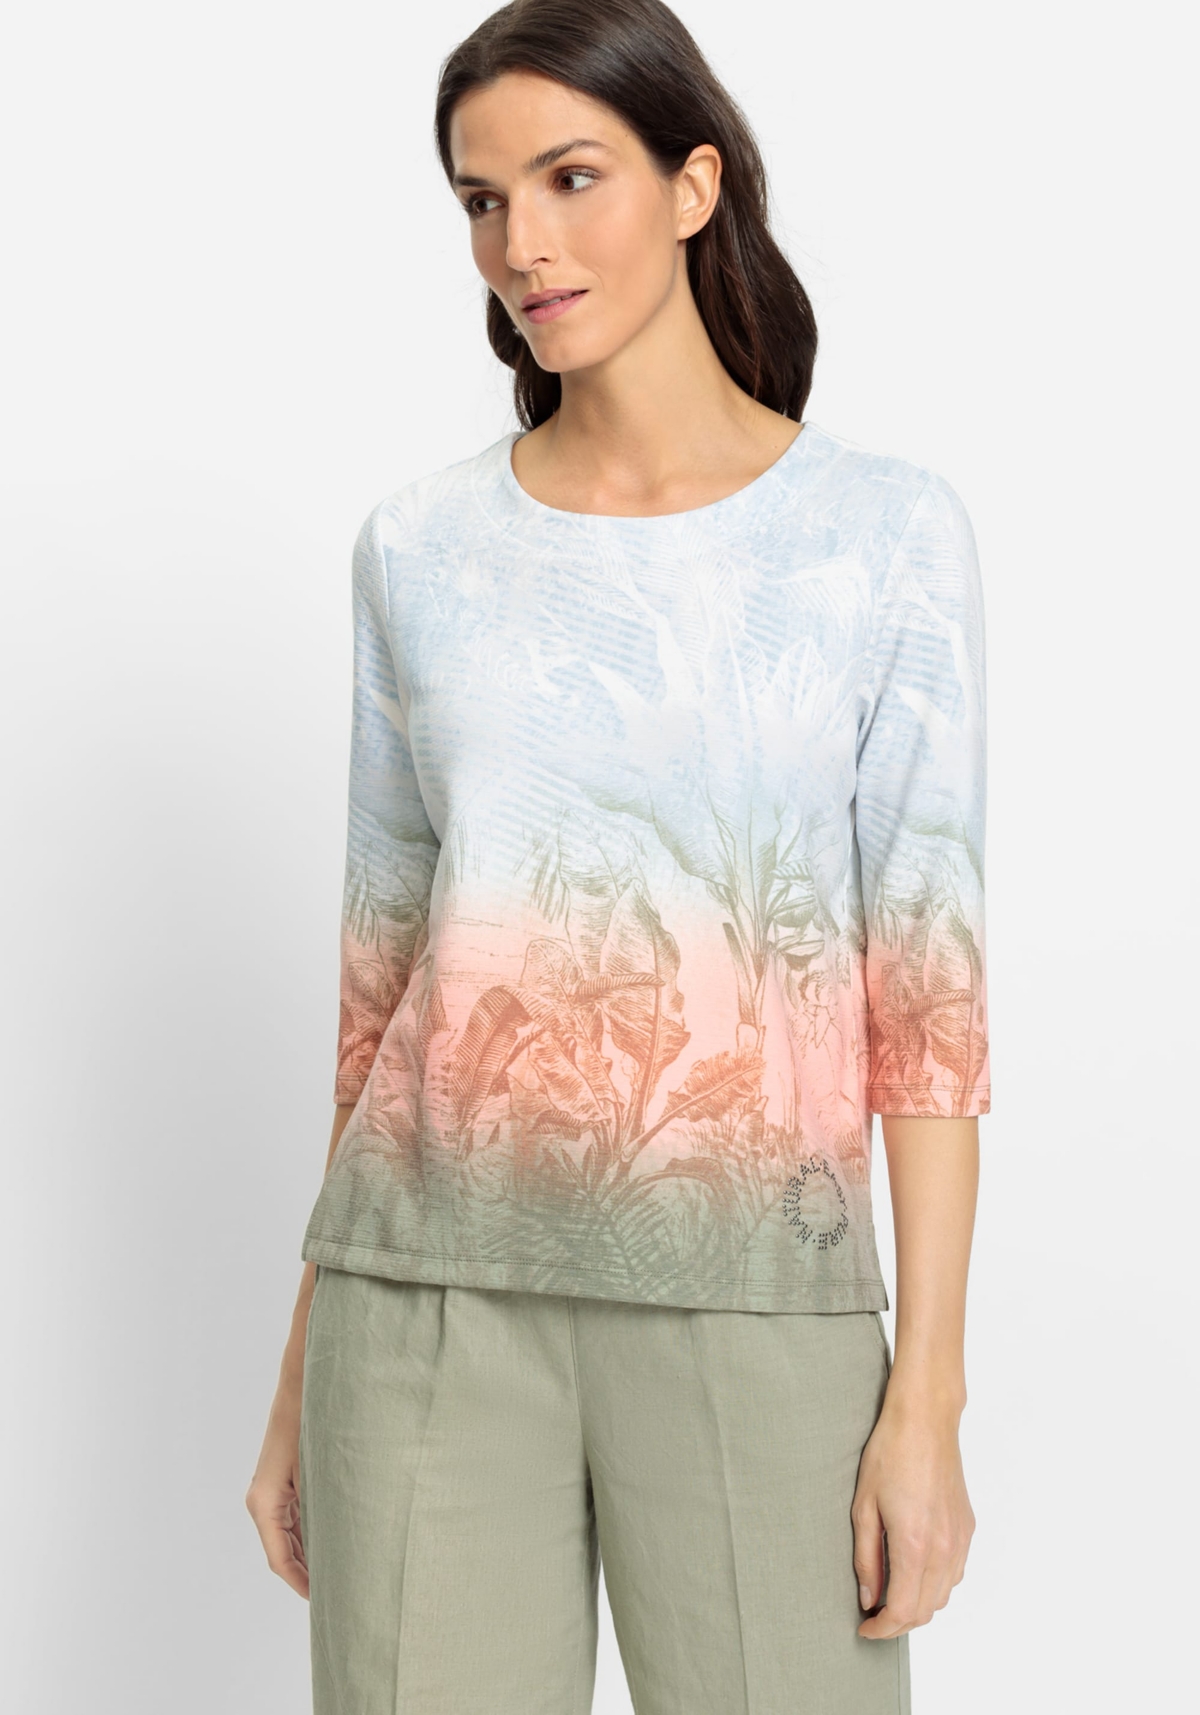 Women's 3/4 Sleeve Mixed Print Jersey Top - Light khaki